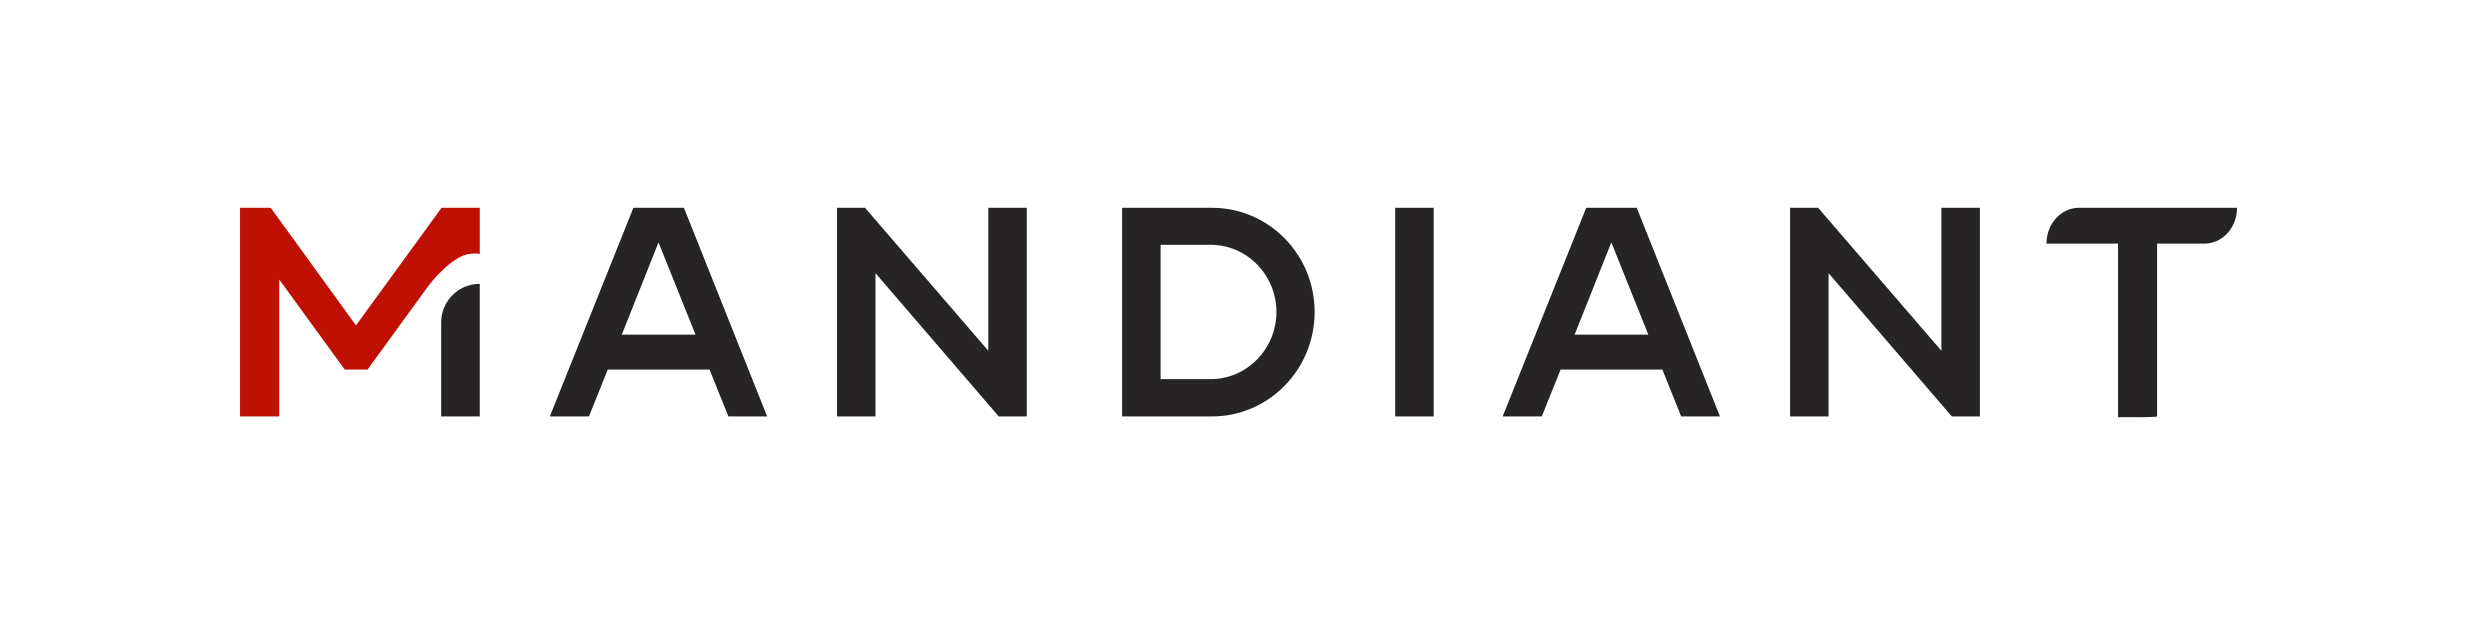 Mandiant logo